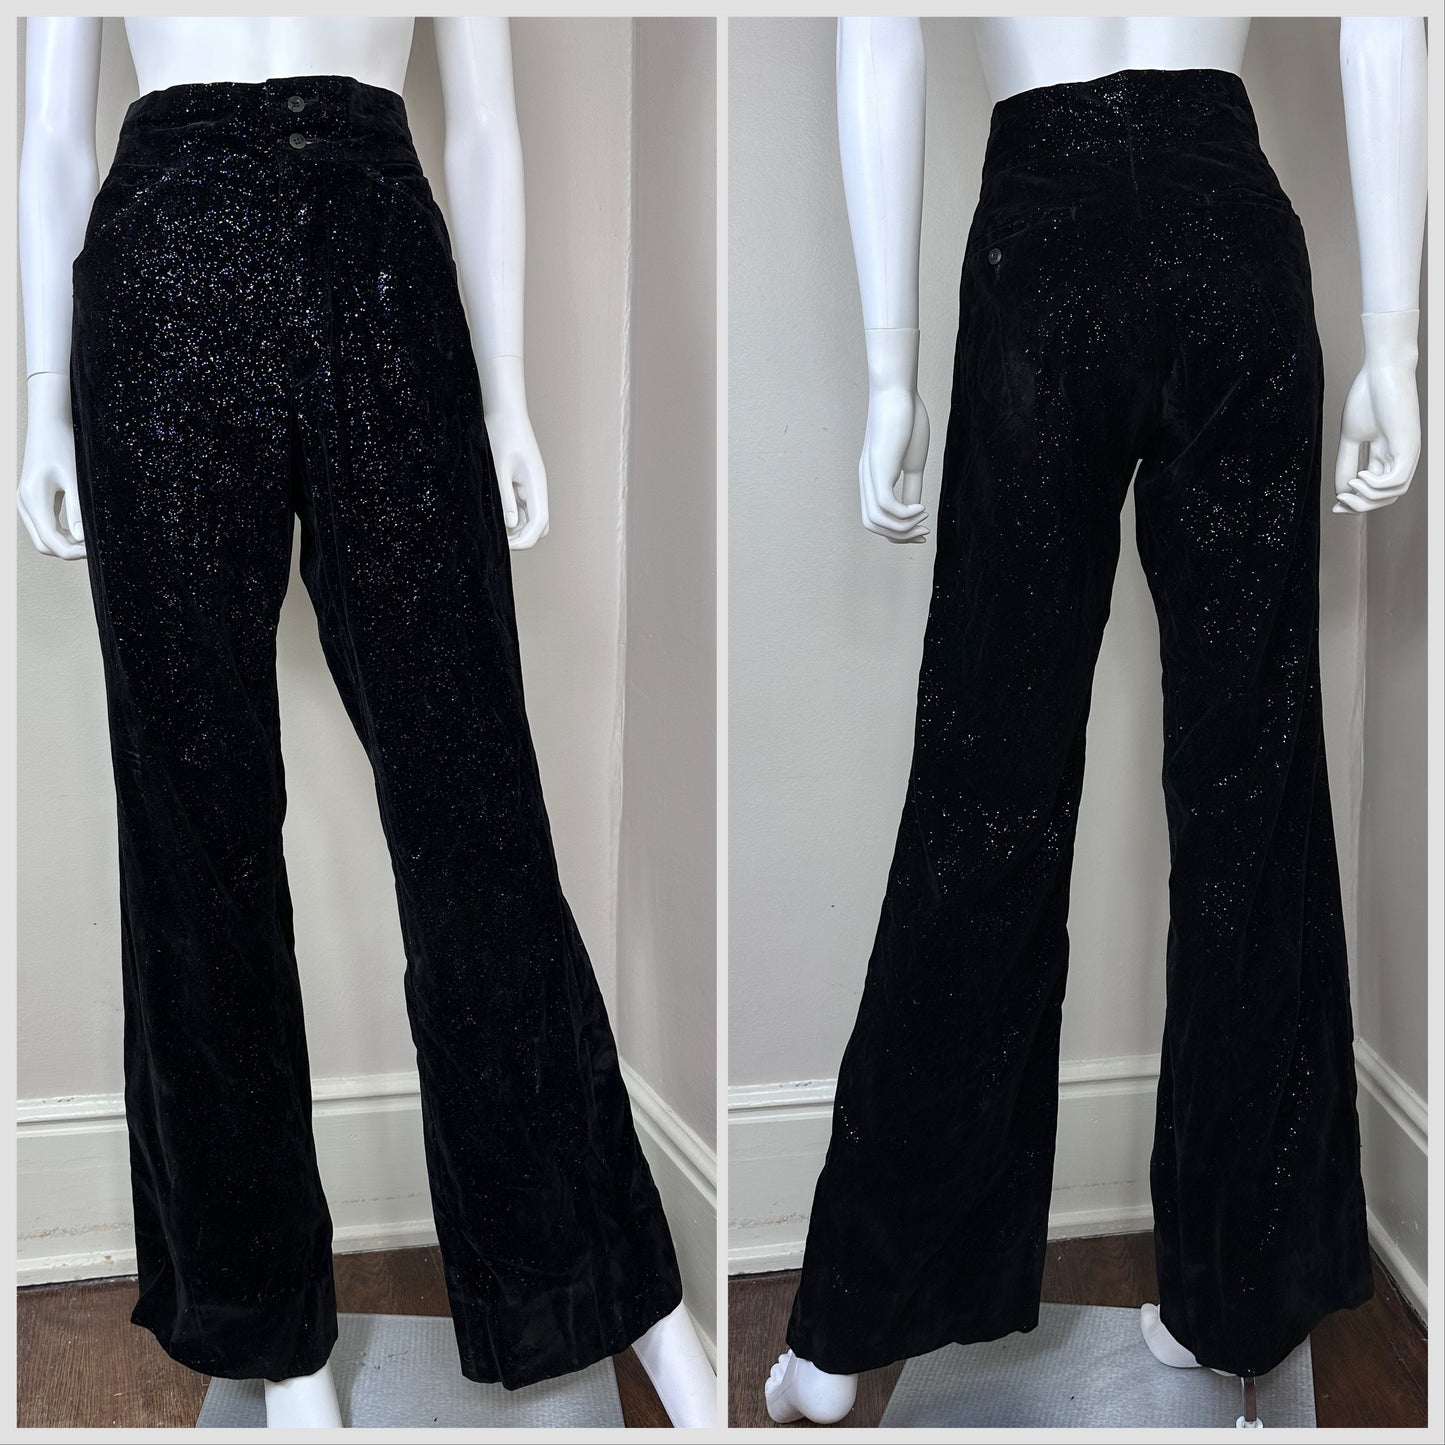 1960s/70s Black Velvet with Rainbow Glitter Suit, National Shirt Shop Jacket and Pants, Size S/M